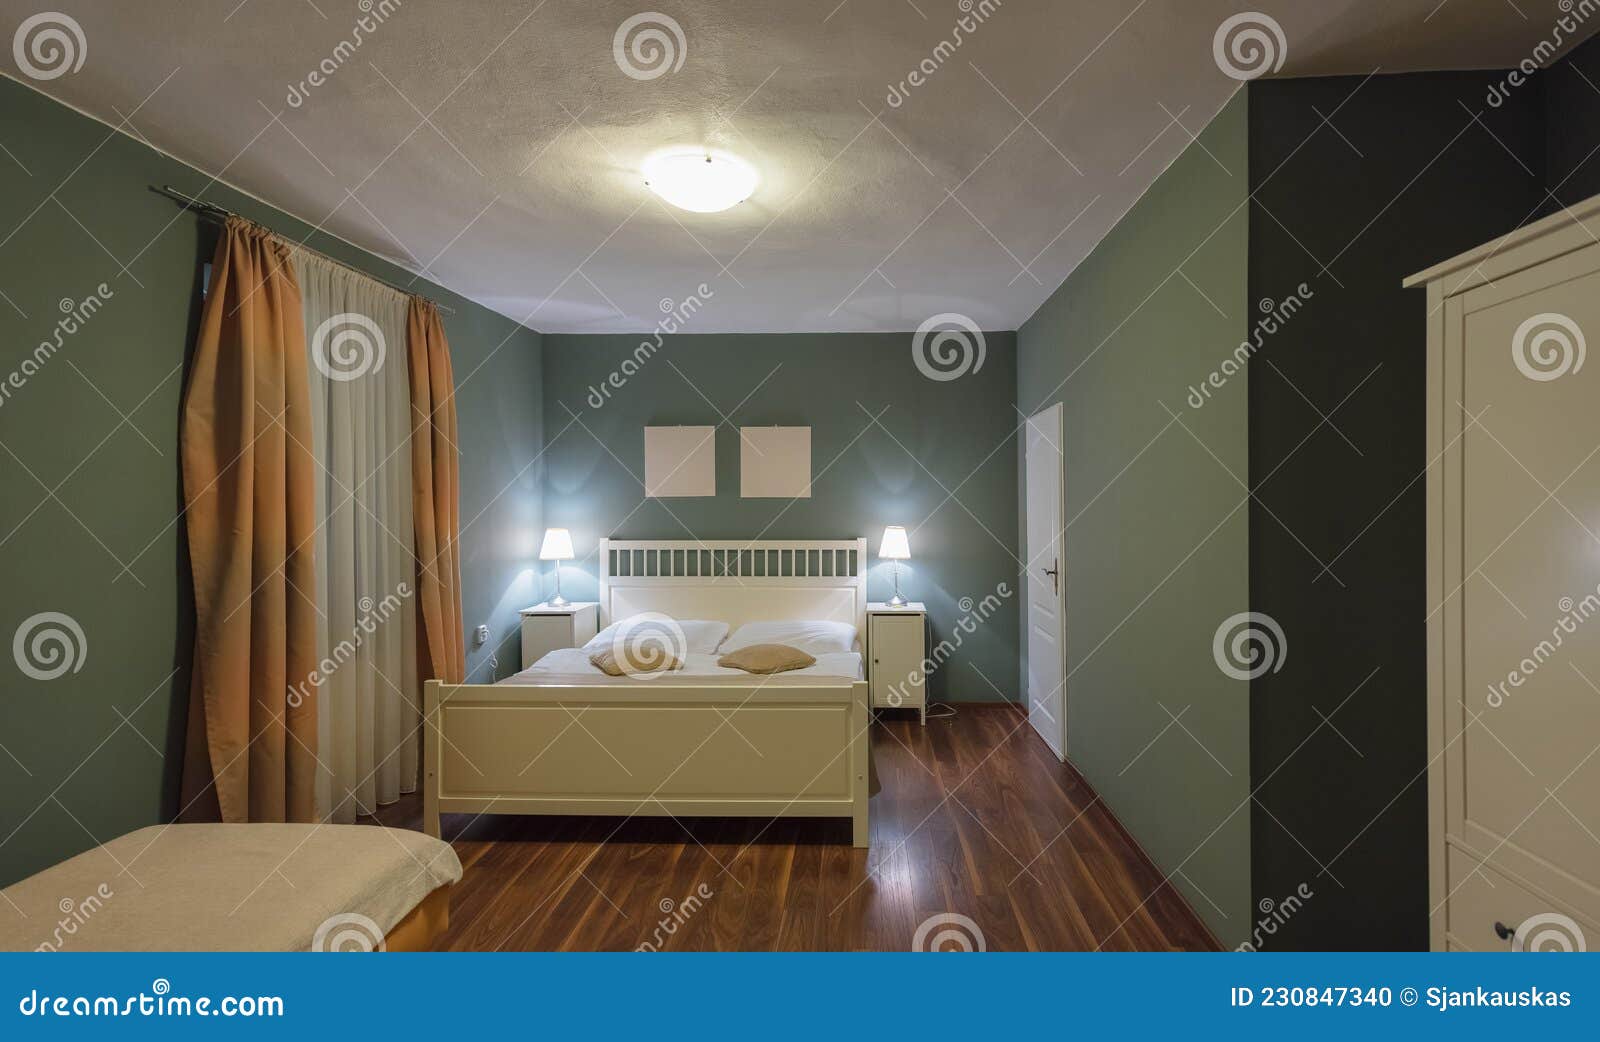 hotel bedroom classic style interior, cosy night atmosphere